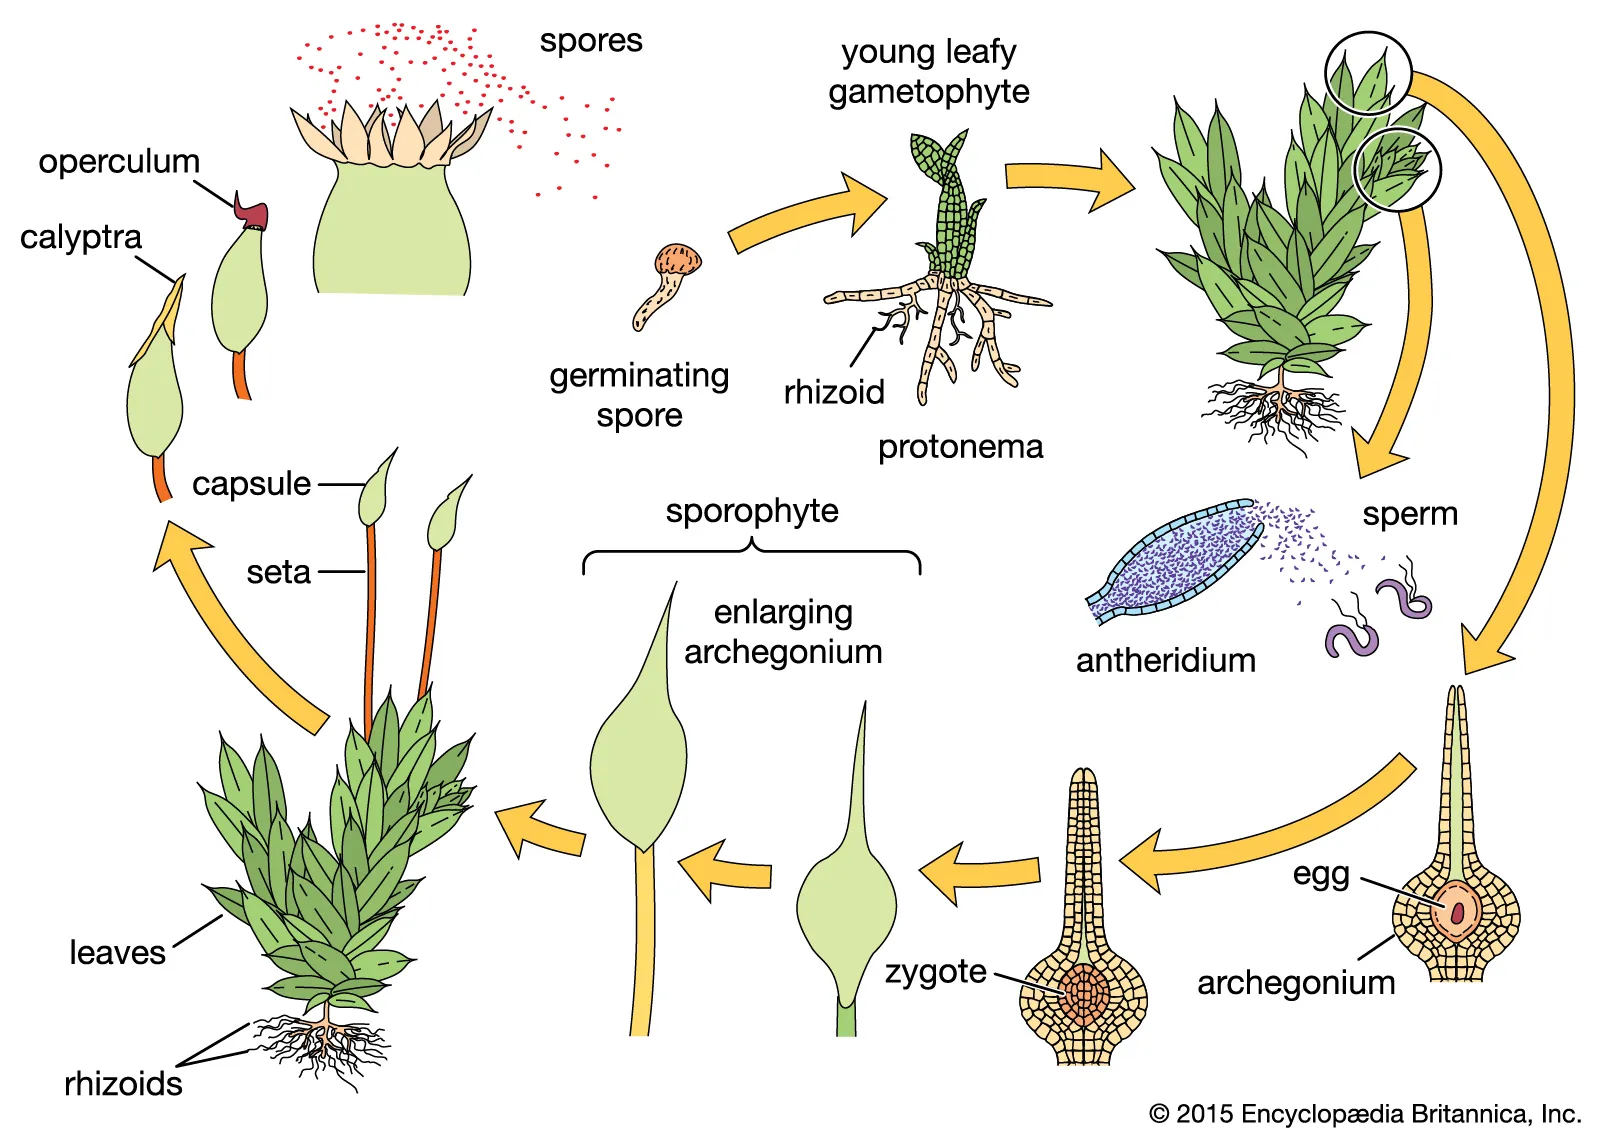 <ul><li><p>capsule: sporangium (makes spores using meiosis)</p></li><li><p>spores grow into protorema (1st cell of gametophyte)</p></li></ul>